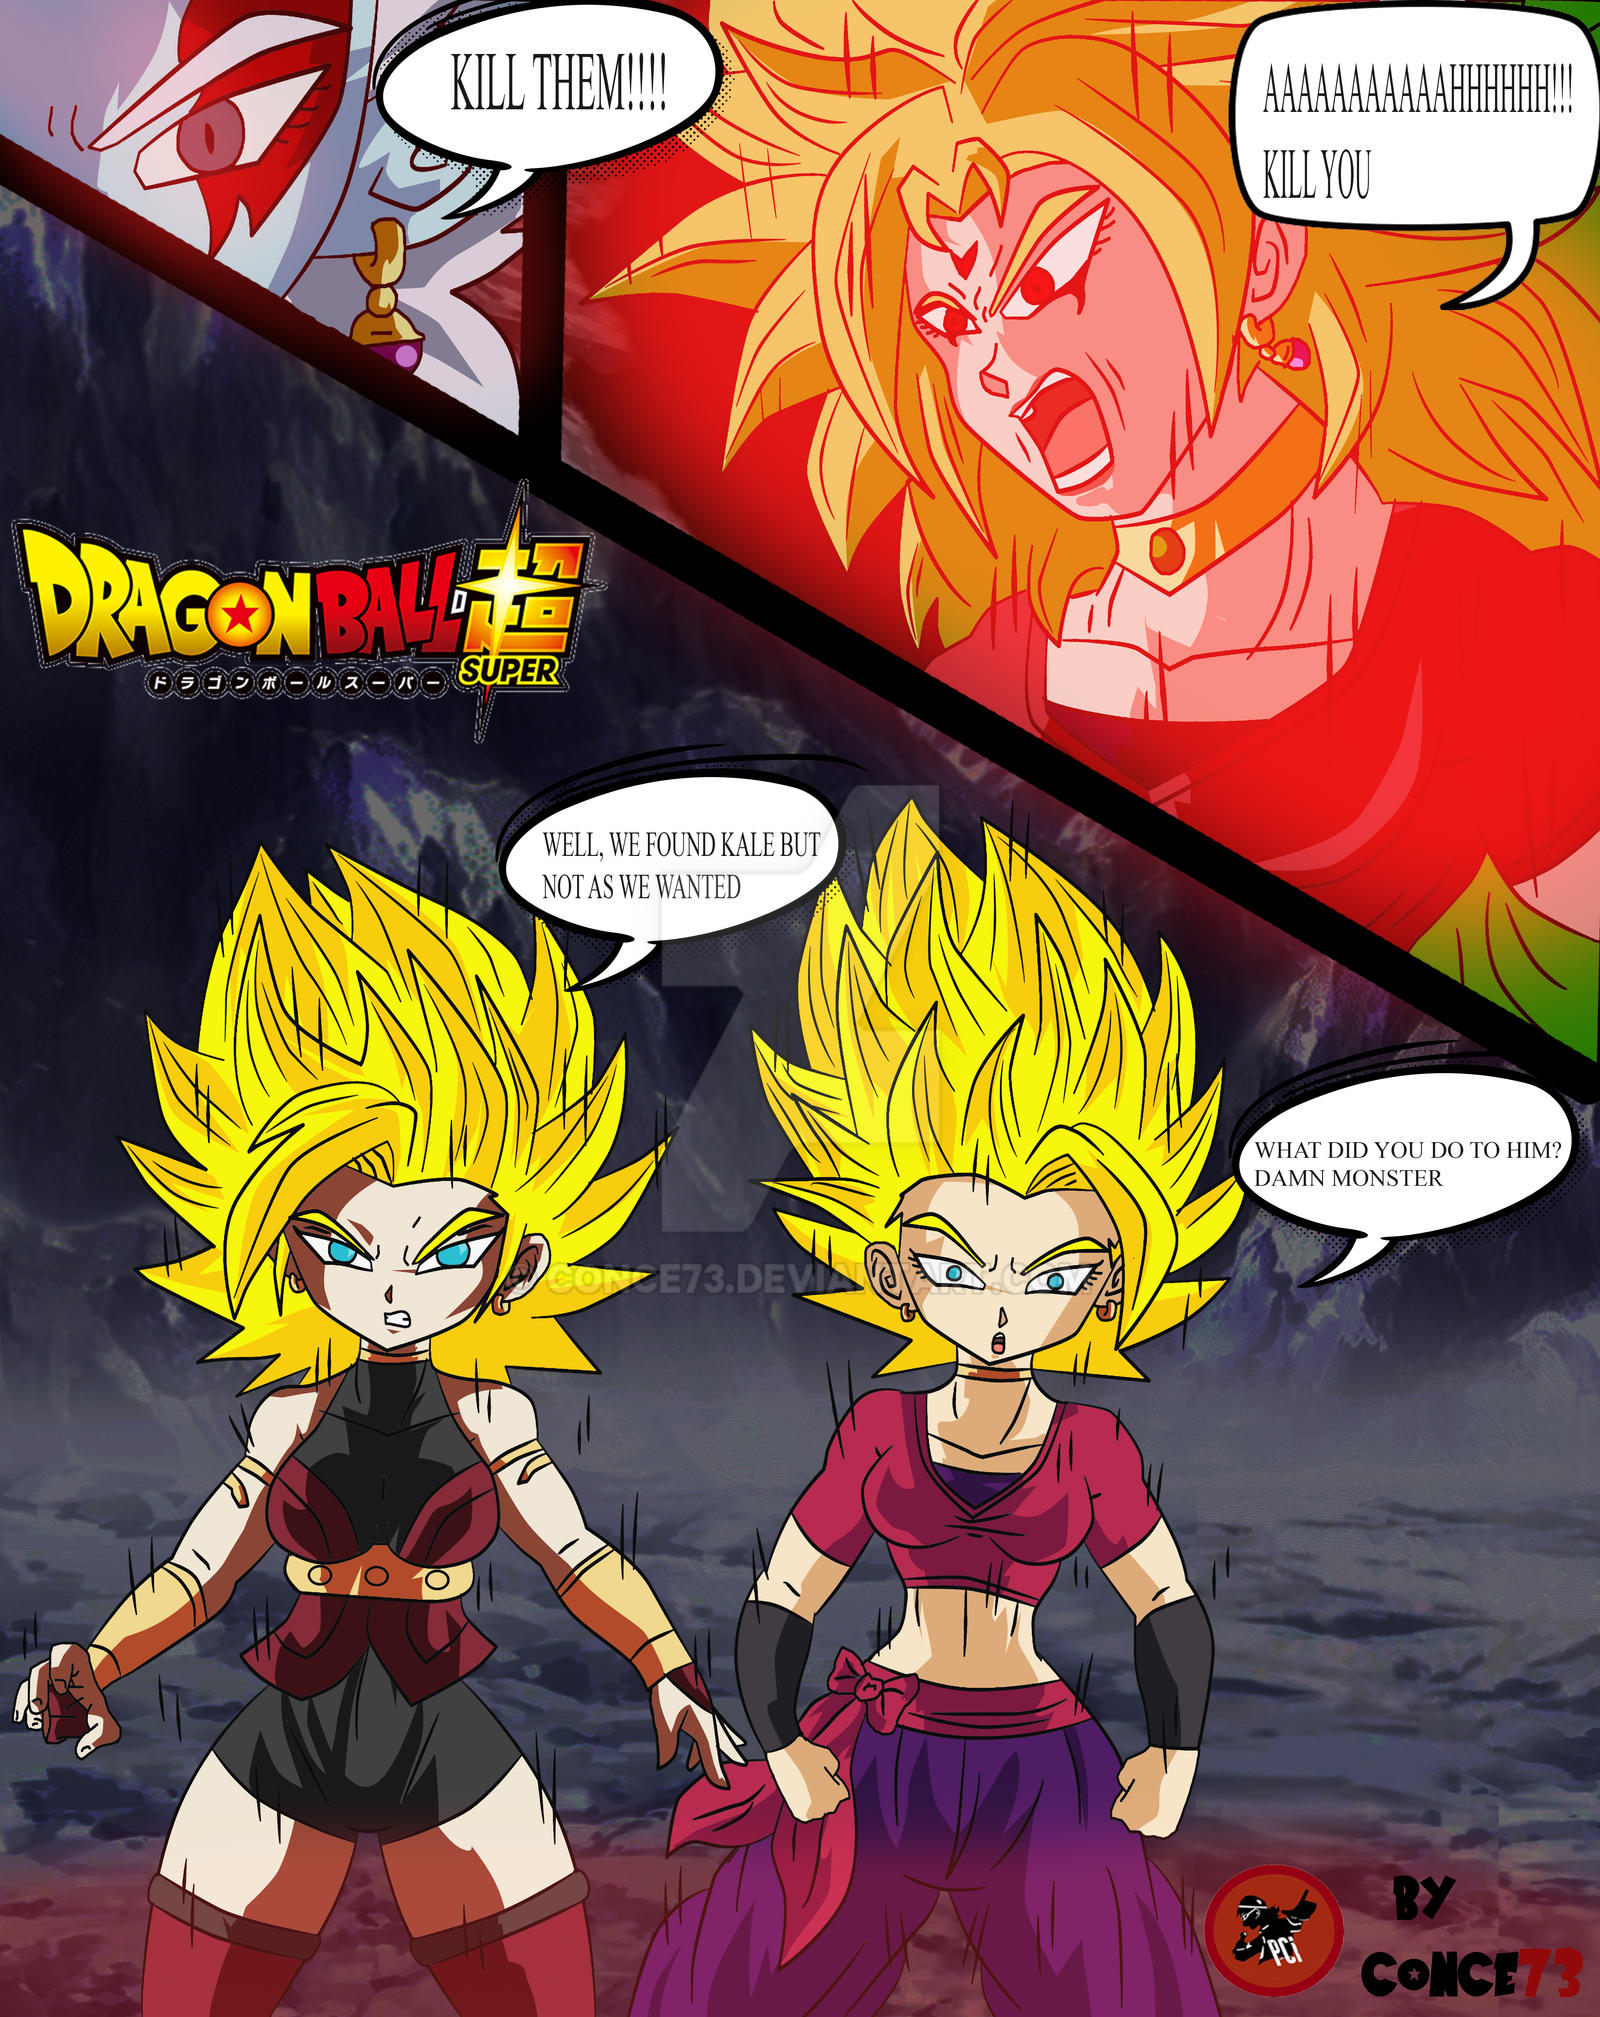 Kale - Dragon Ball Super #2 by UrielALV on DeviantArt